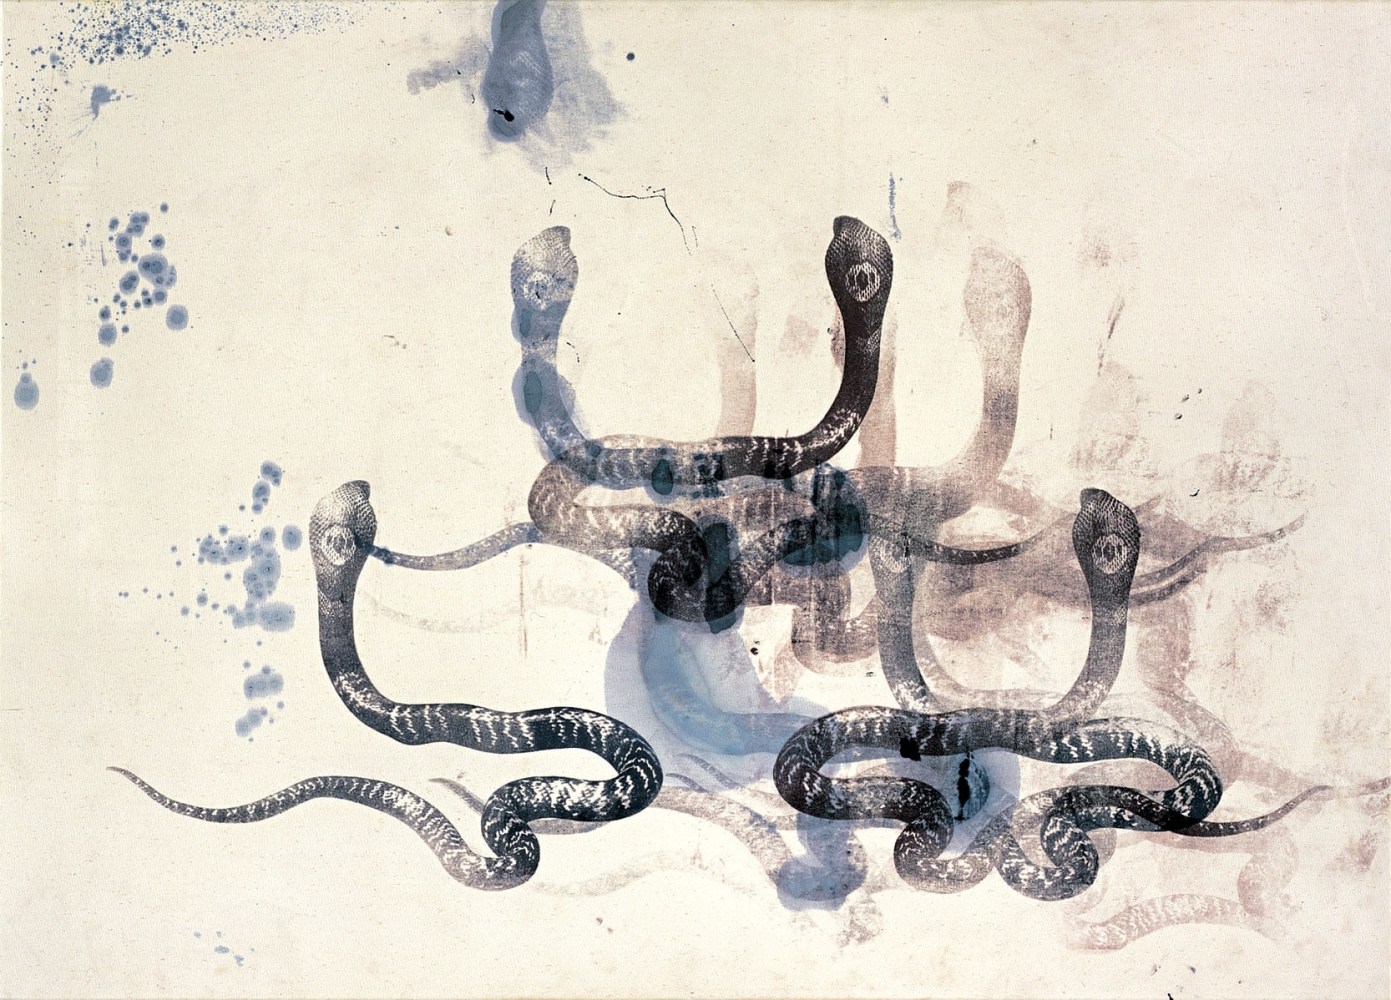 Philip Taaffe
Cobra Epiphany, 1996
Mixed media on canvas
46 x 64 inches
(116.8 x 162.6 cm)